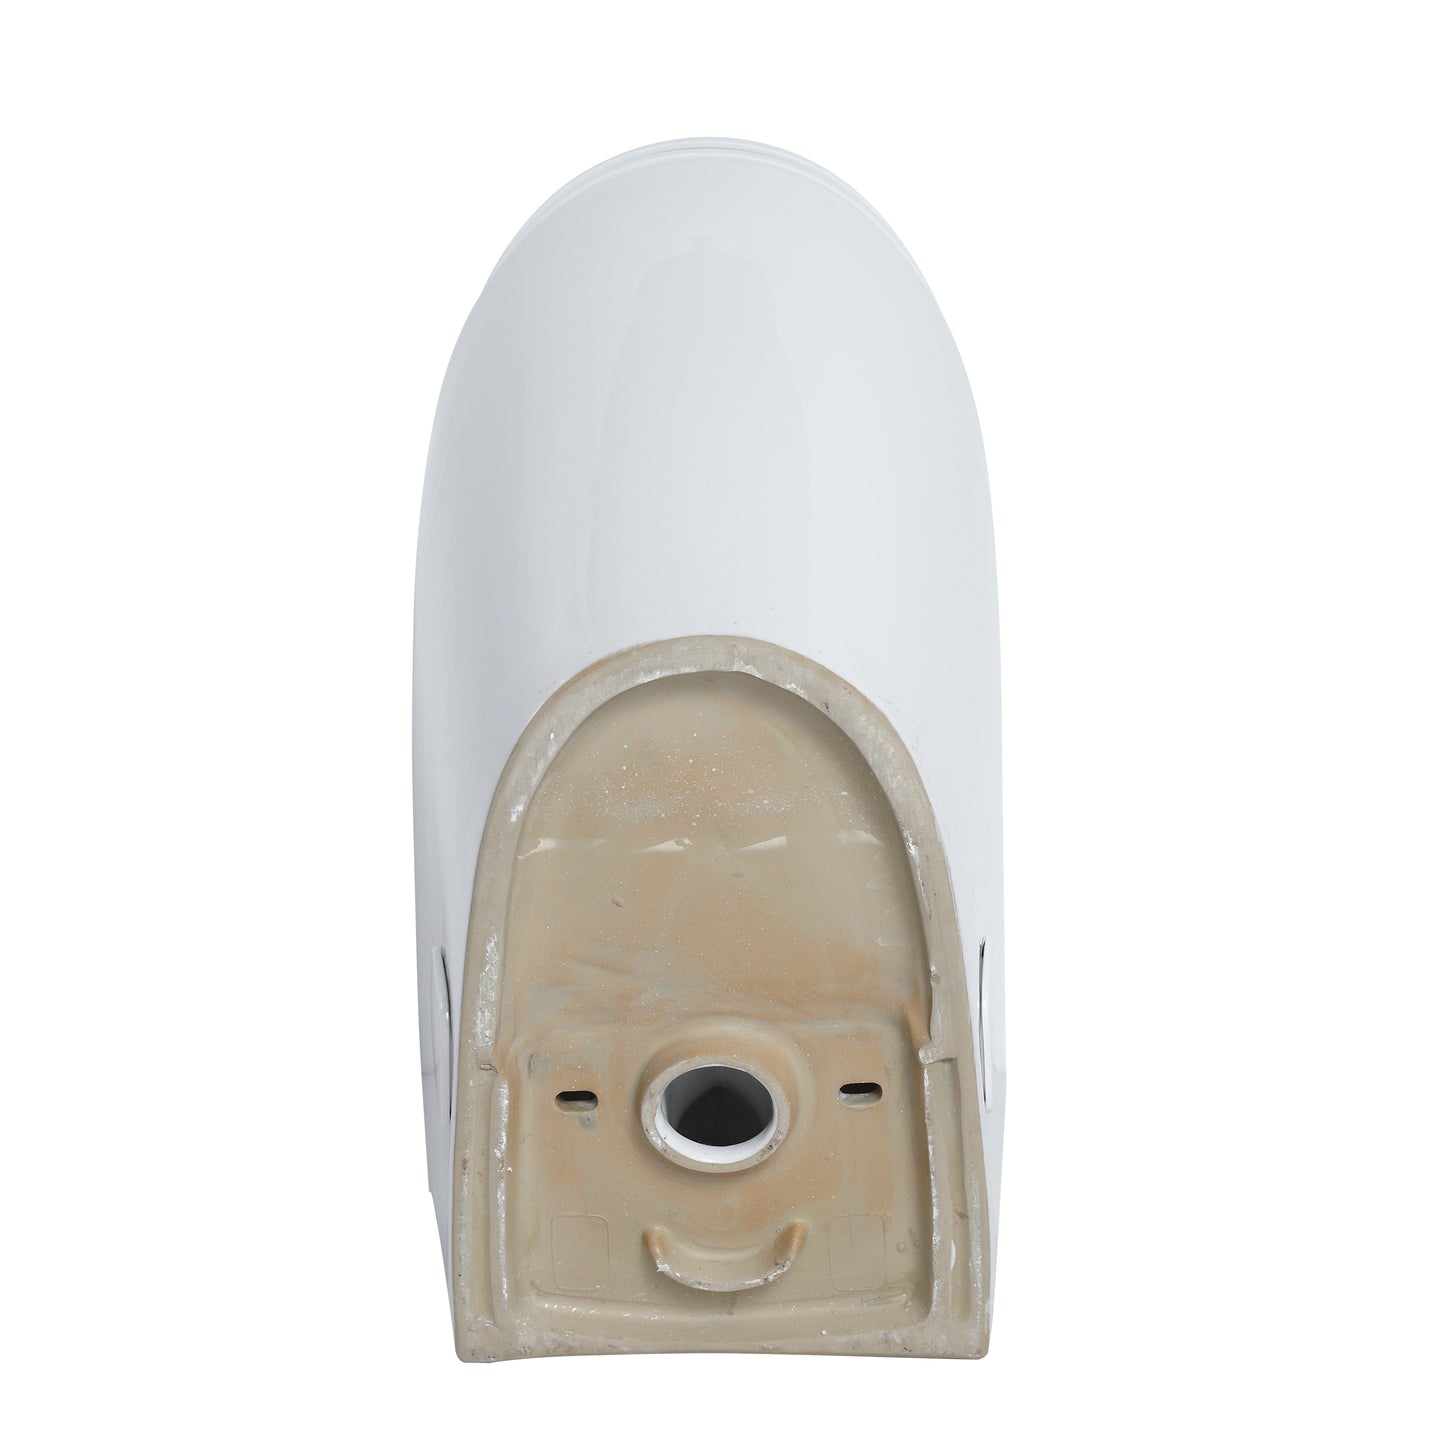 Ceramic One Piece Toilet 27 Inch Length With Soft Close Seat(G-lemon SKU:BTC137MOWH)